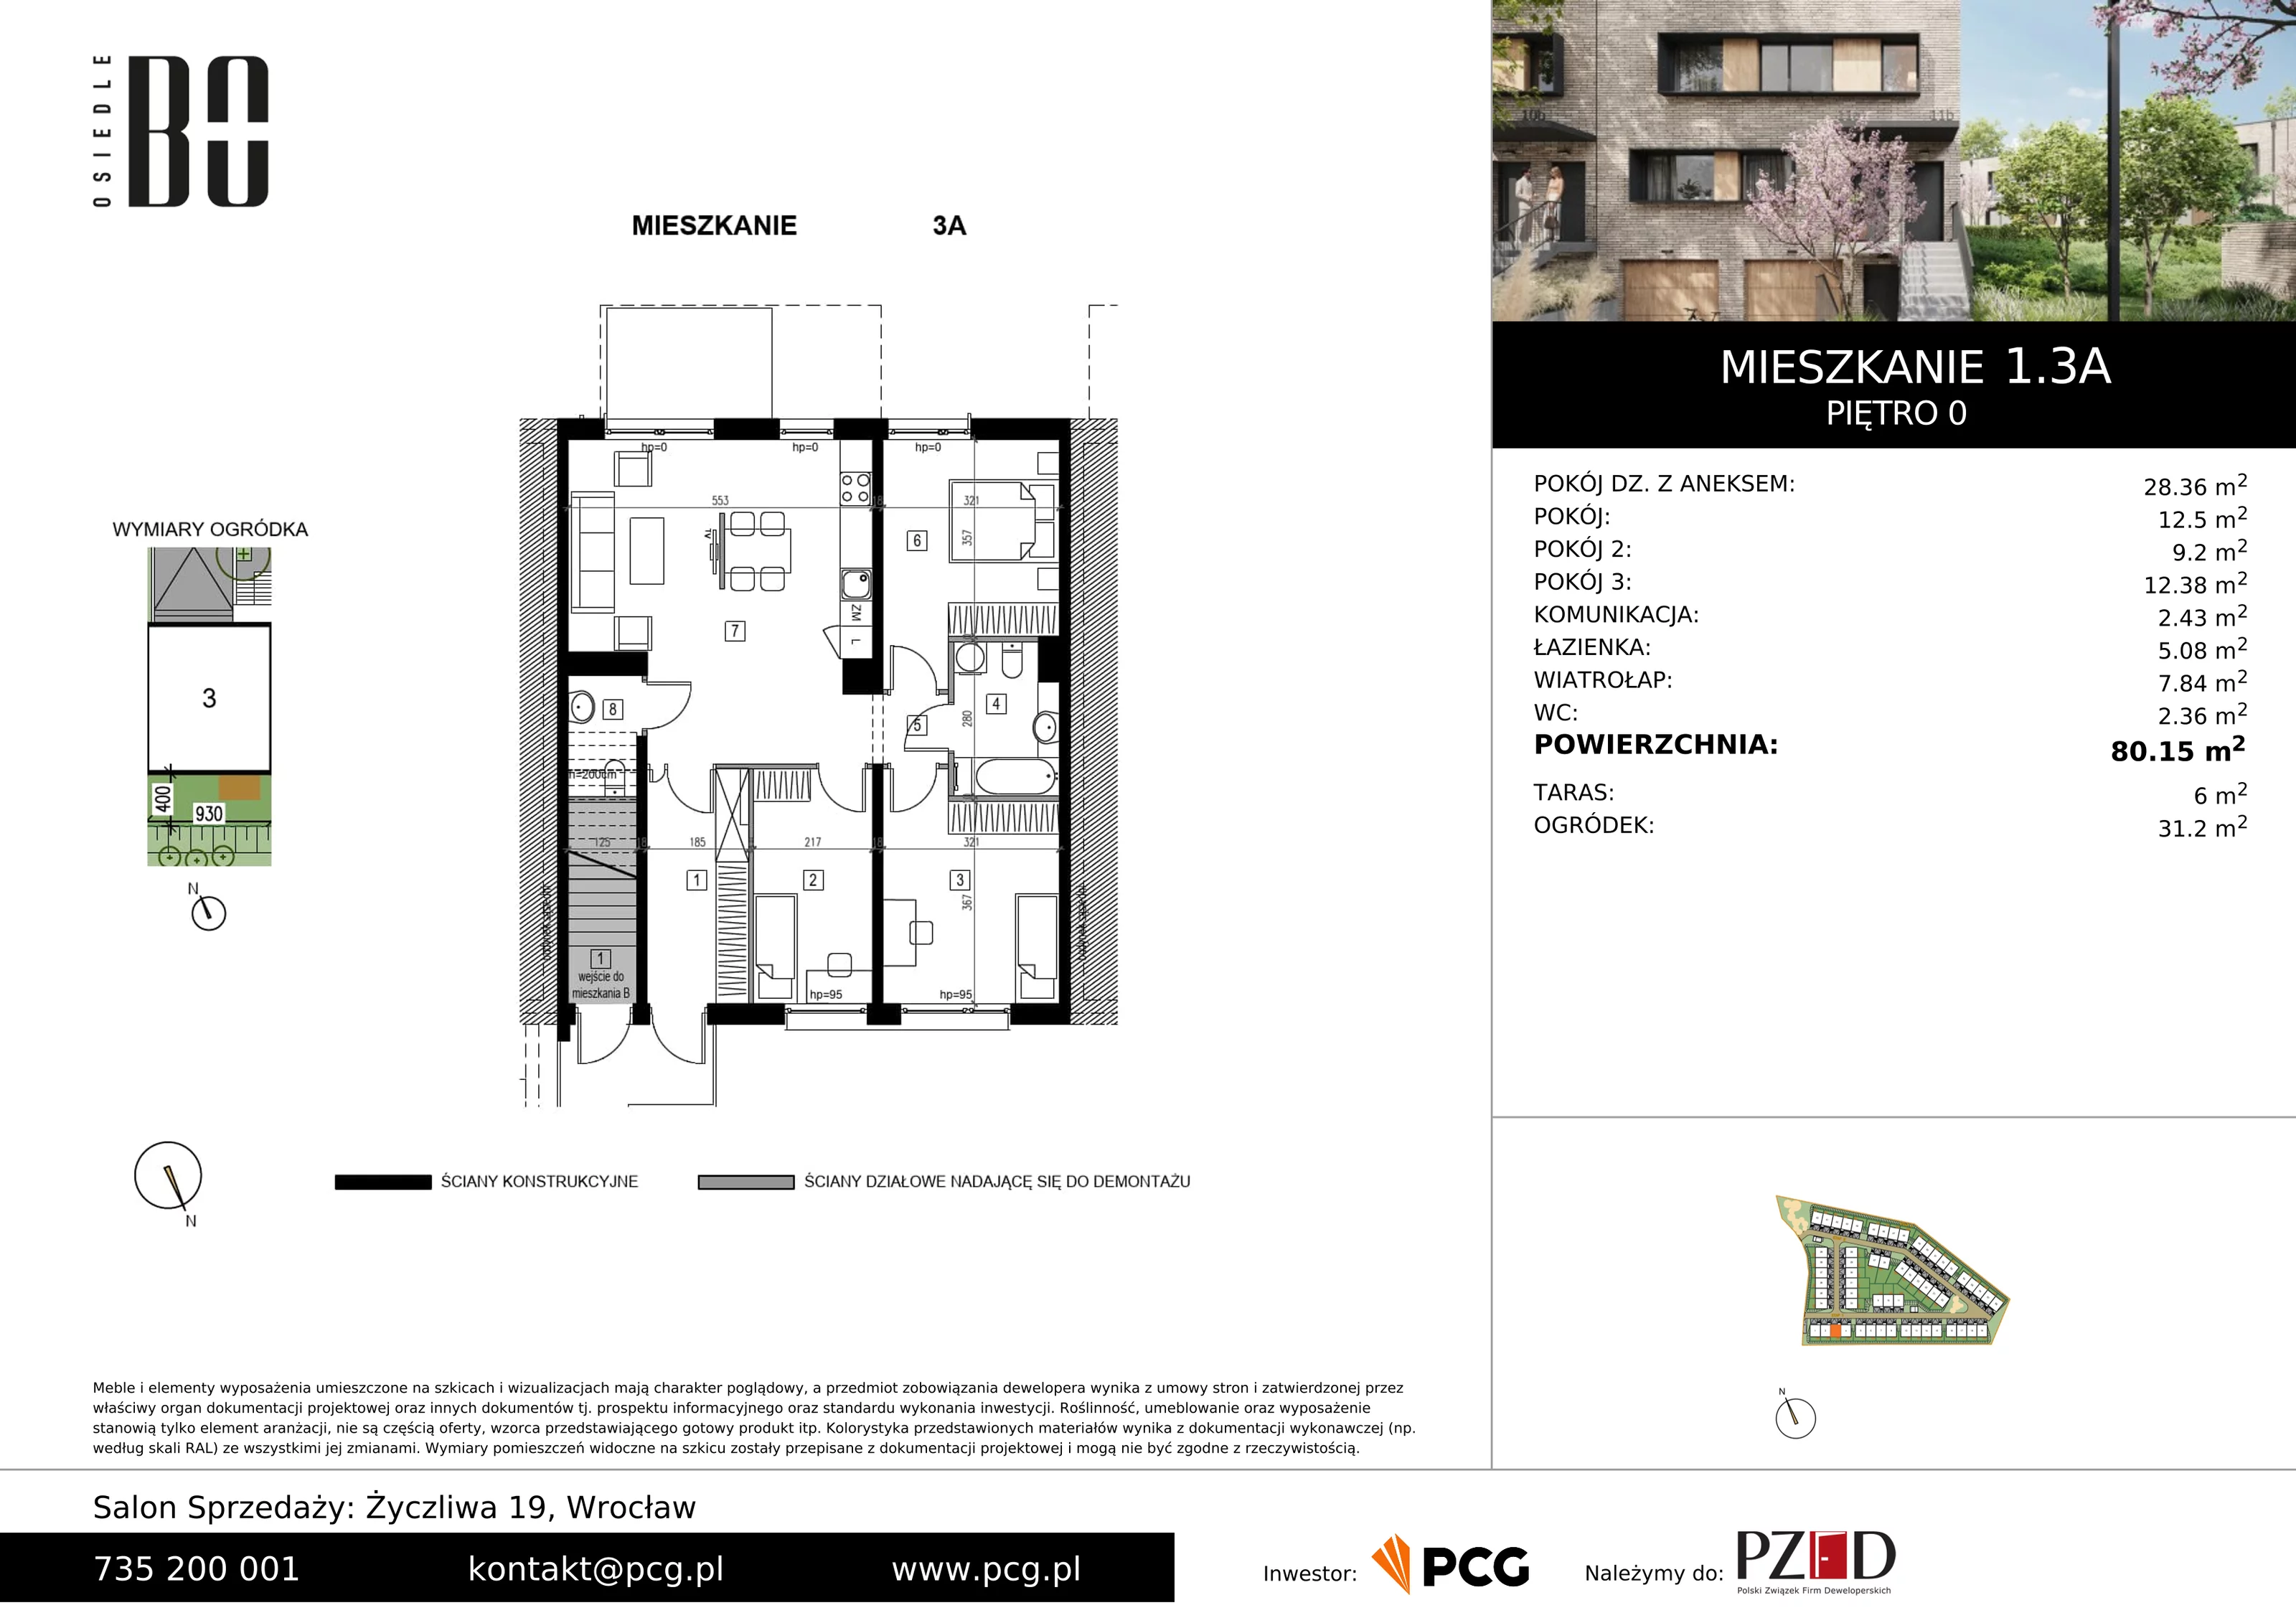 Apartament 80,15 m², parter, oferta nr 1.3A, Osiedle BO, Wrocław, Kowale, ul. Bociana